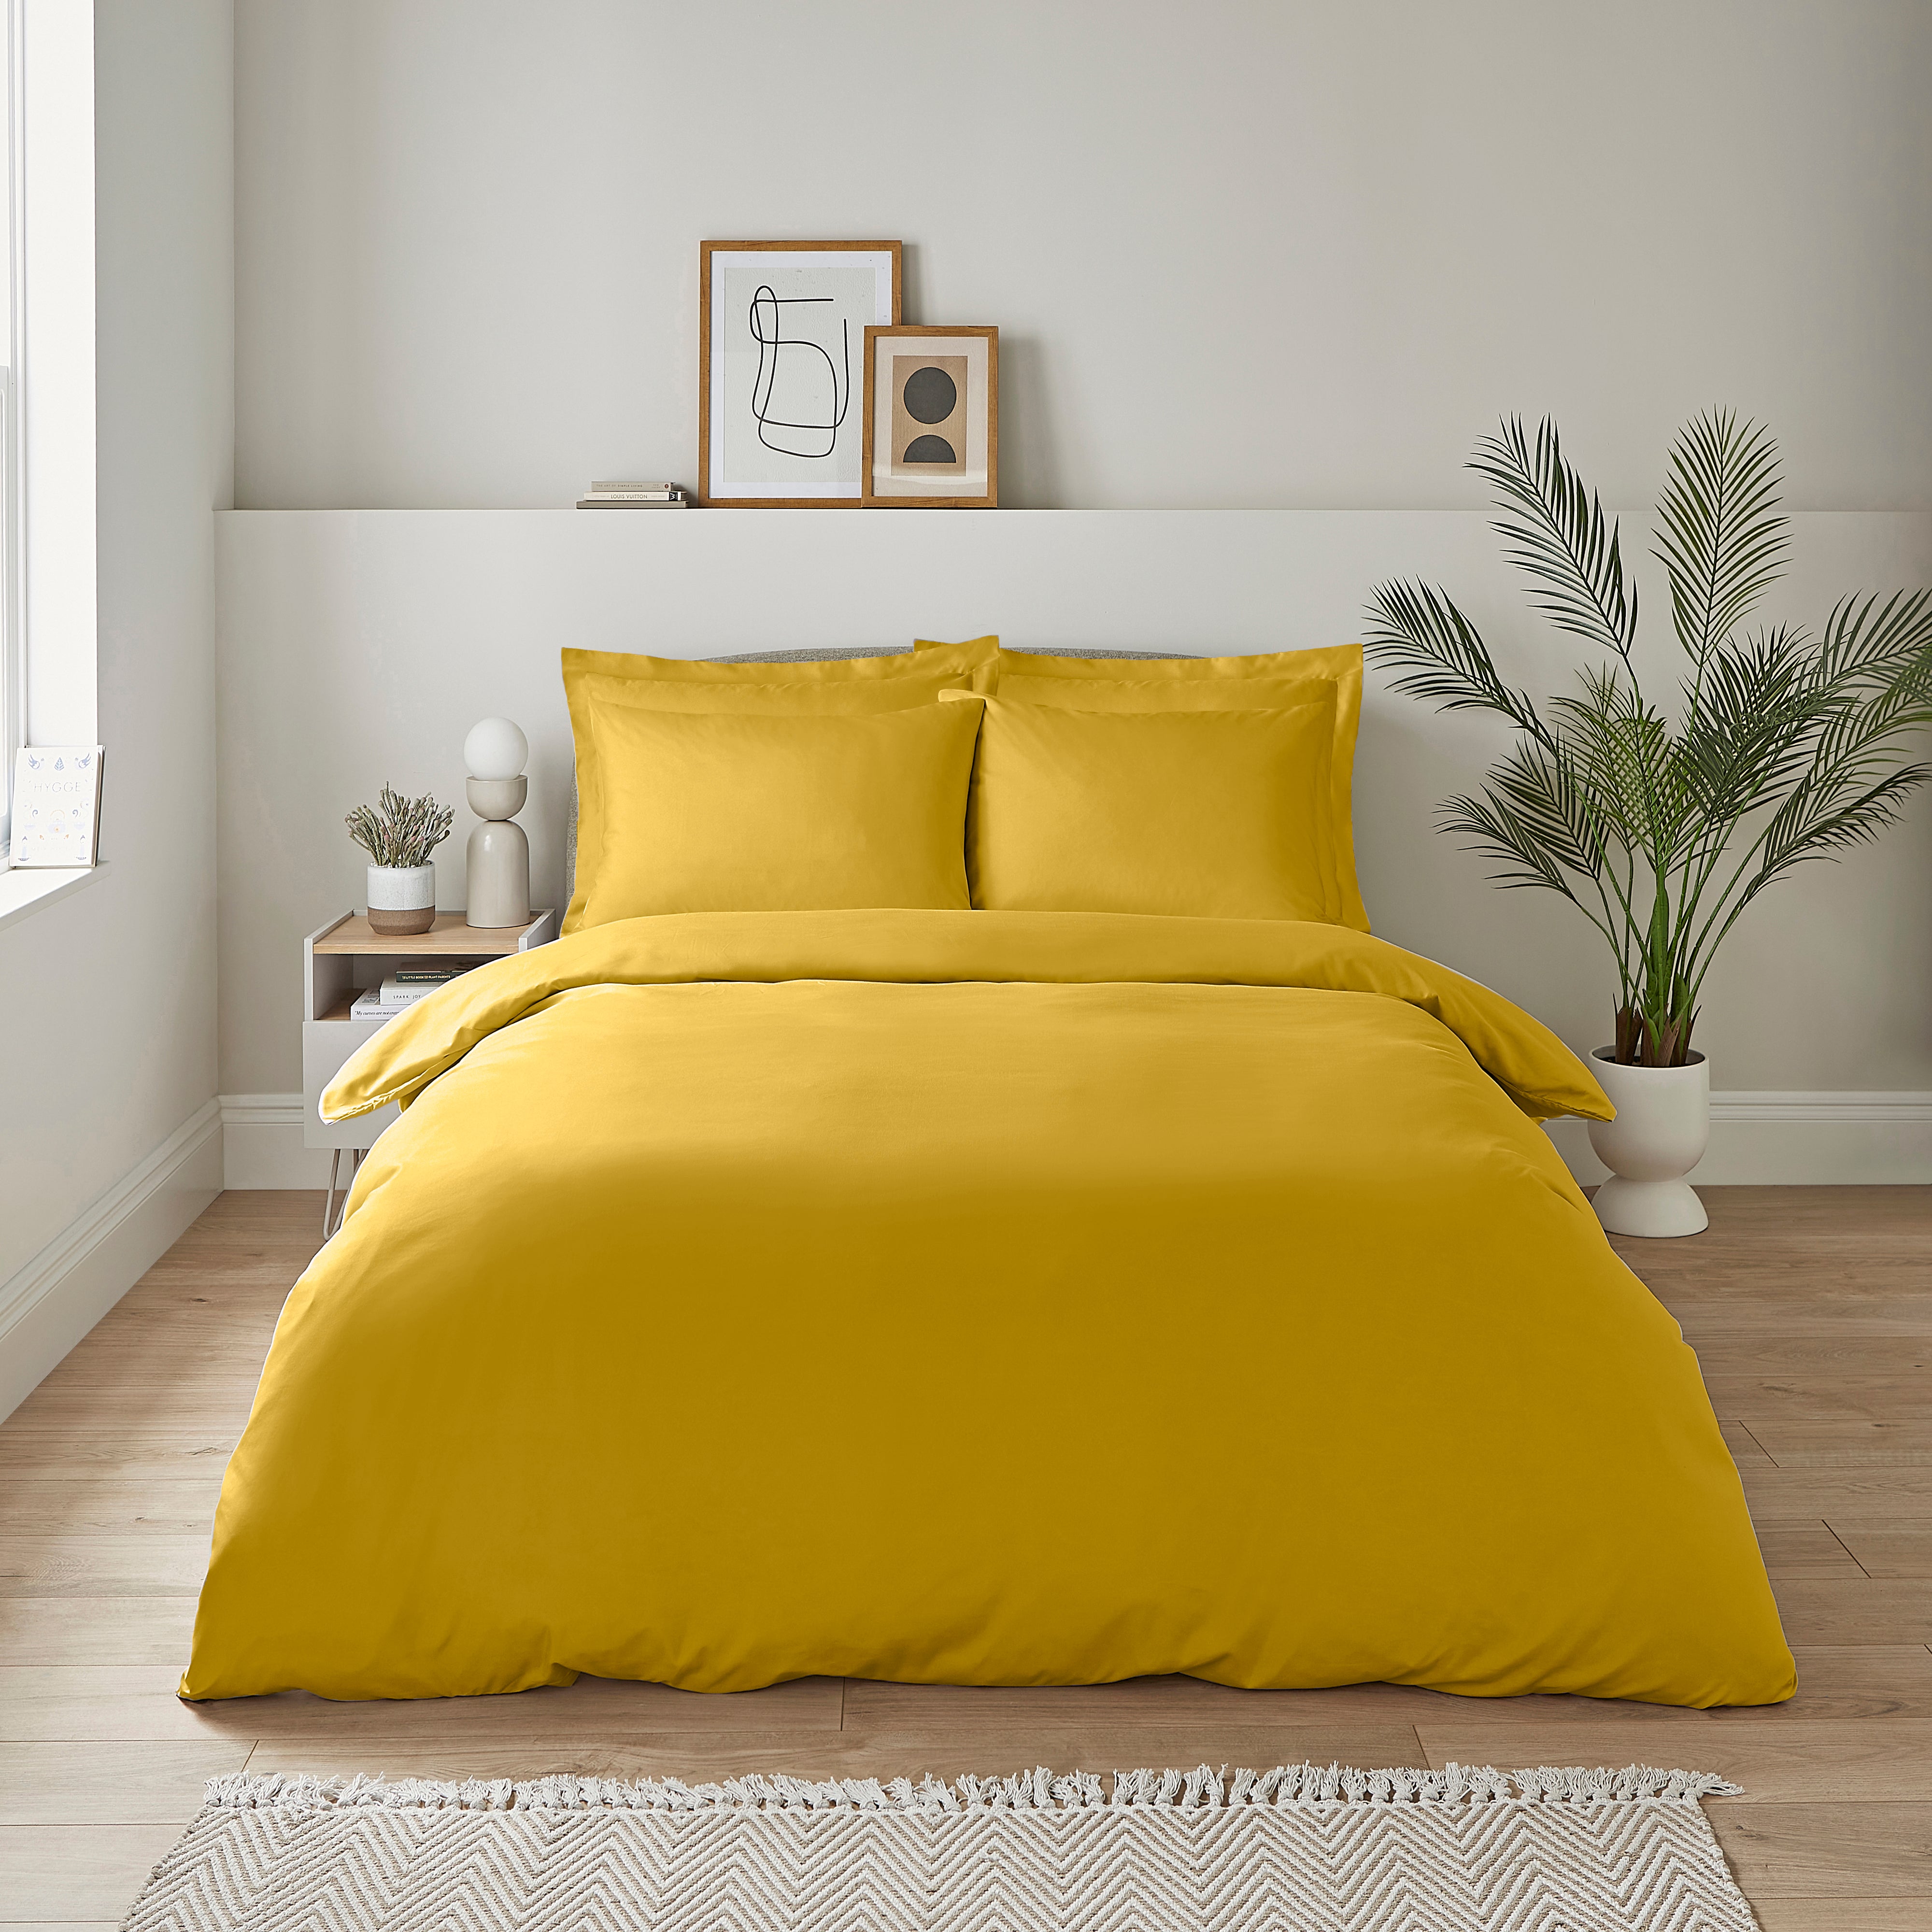 Super Soft Yellow Duvet Cover Pillowcase Set Yellow